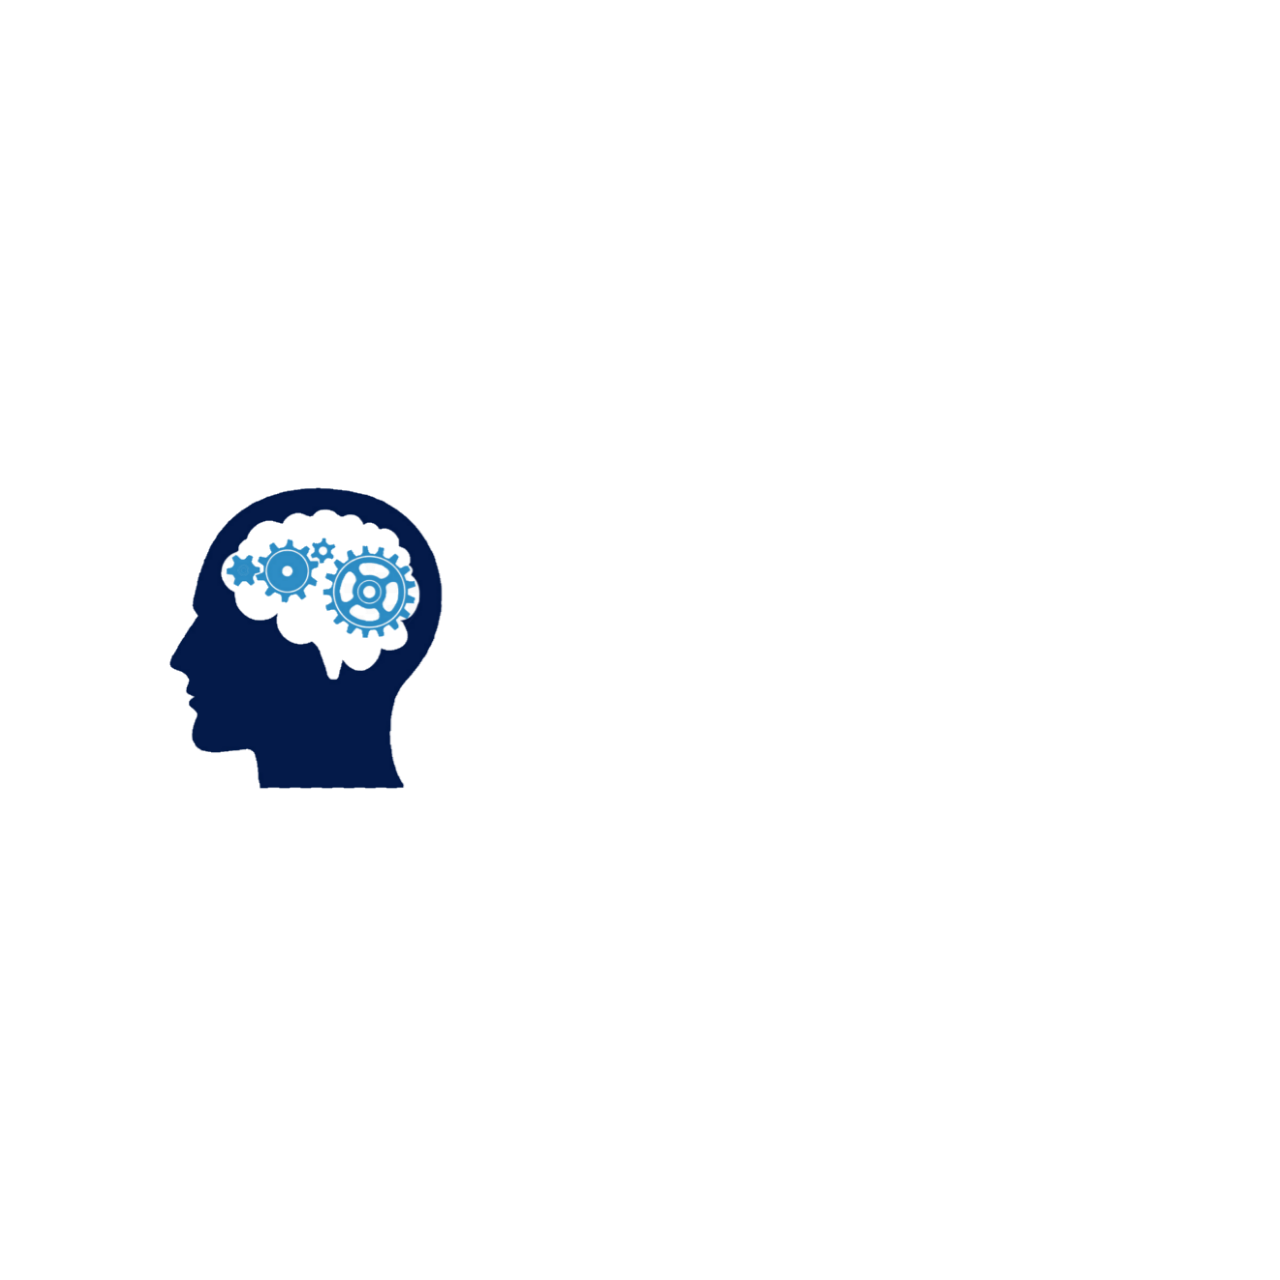 BrainIgniter